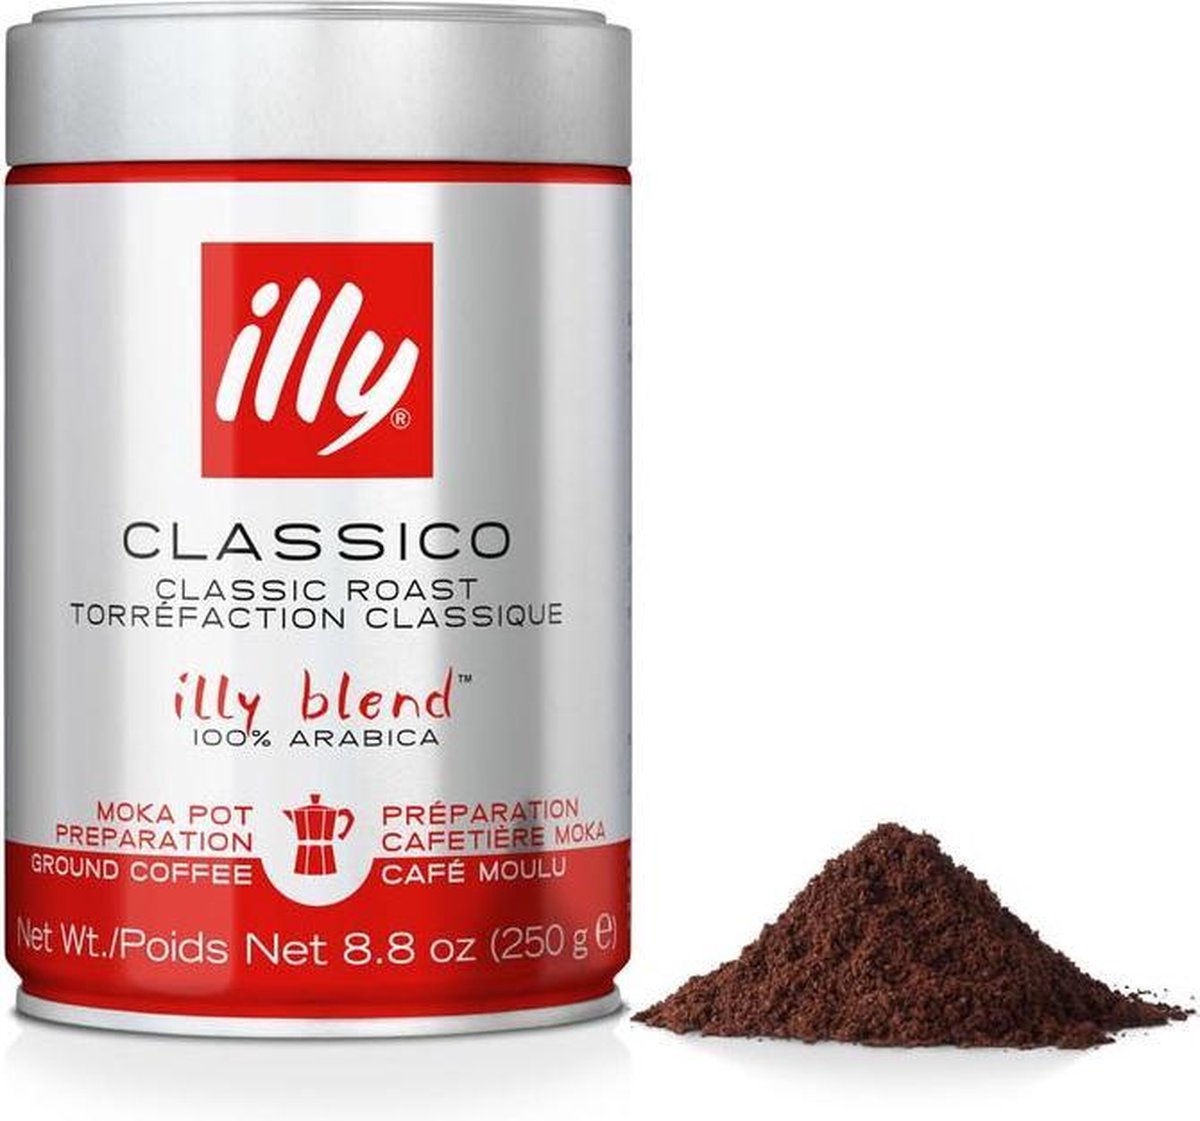 illy - Koffie Moka maling classico 250 G gemalen